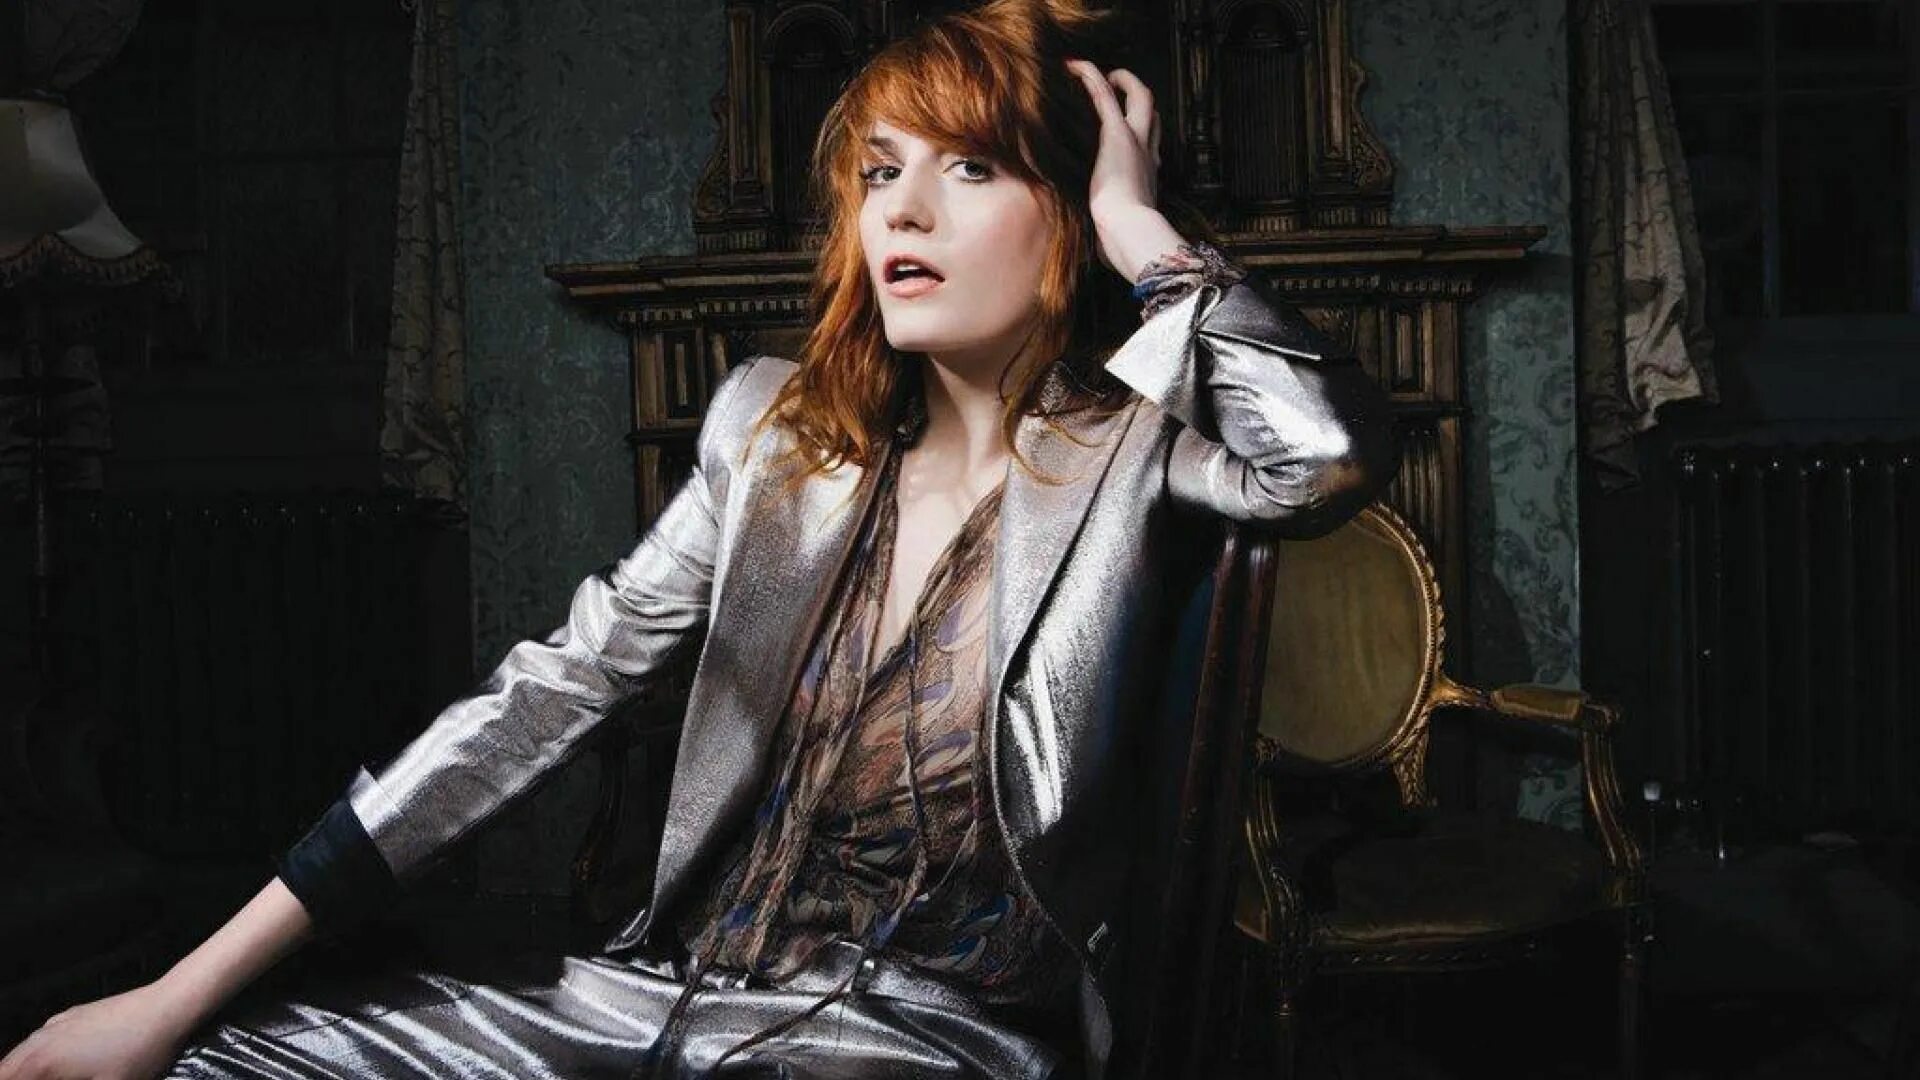 Флоренс. Флоренс Уэлч. Группа Florence and the Machine. Флоренс Уэлш 2019. Уэлч, Флоренс 2007.